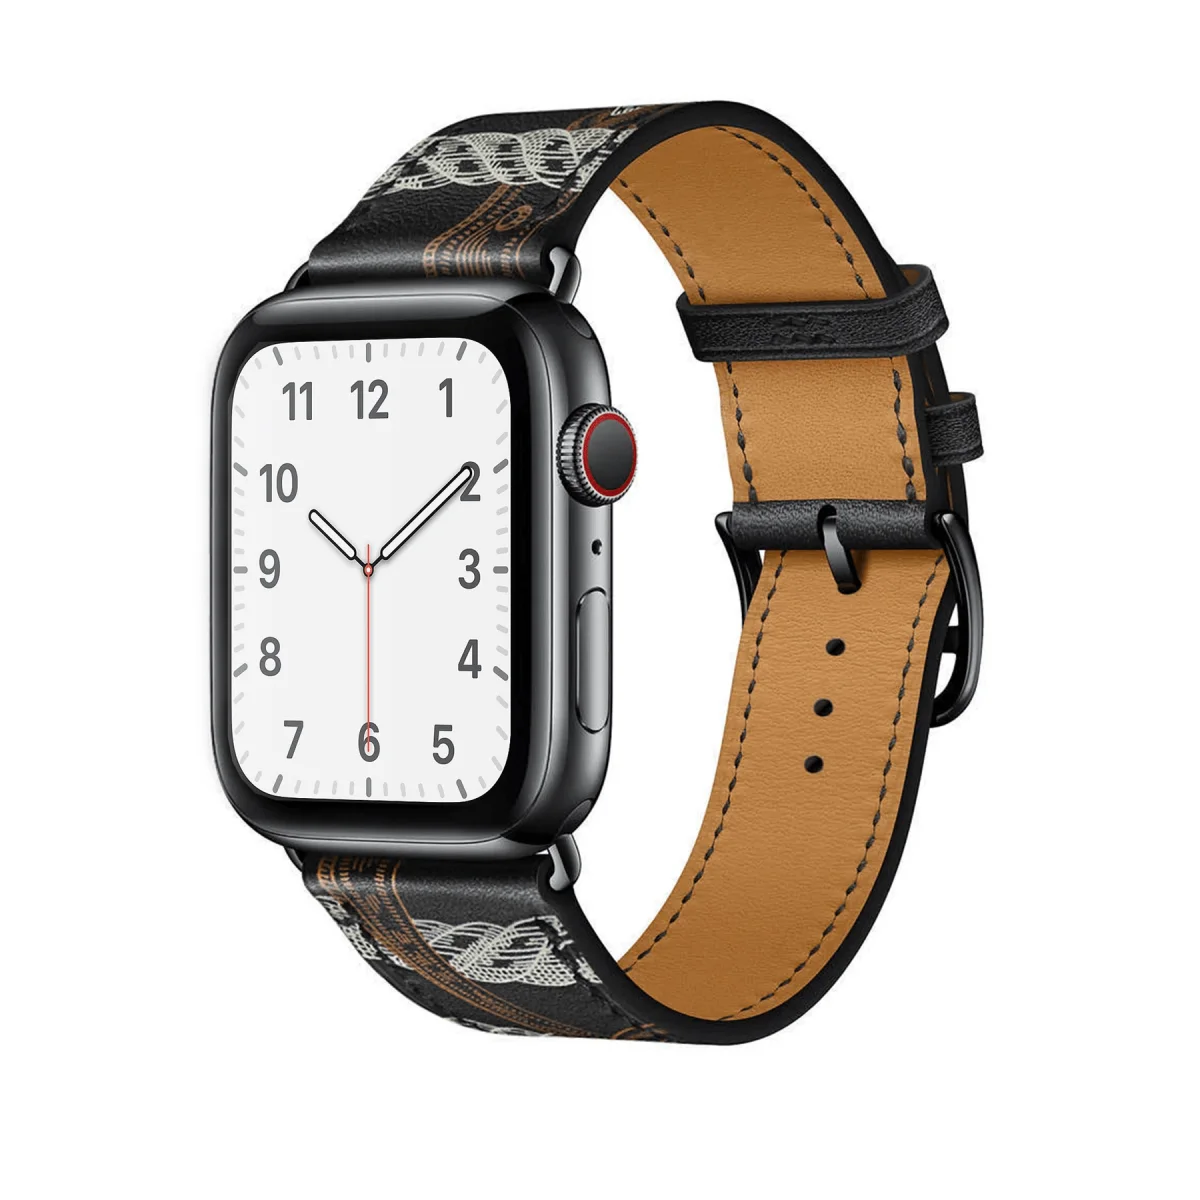 Řemínek iMore Single Tour Apple Watch Series 3/2/1 (38mm) - Noir